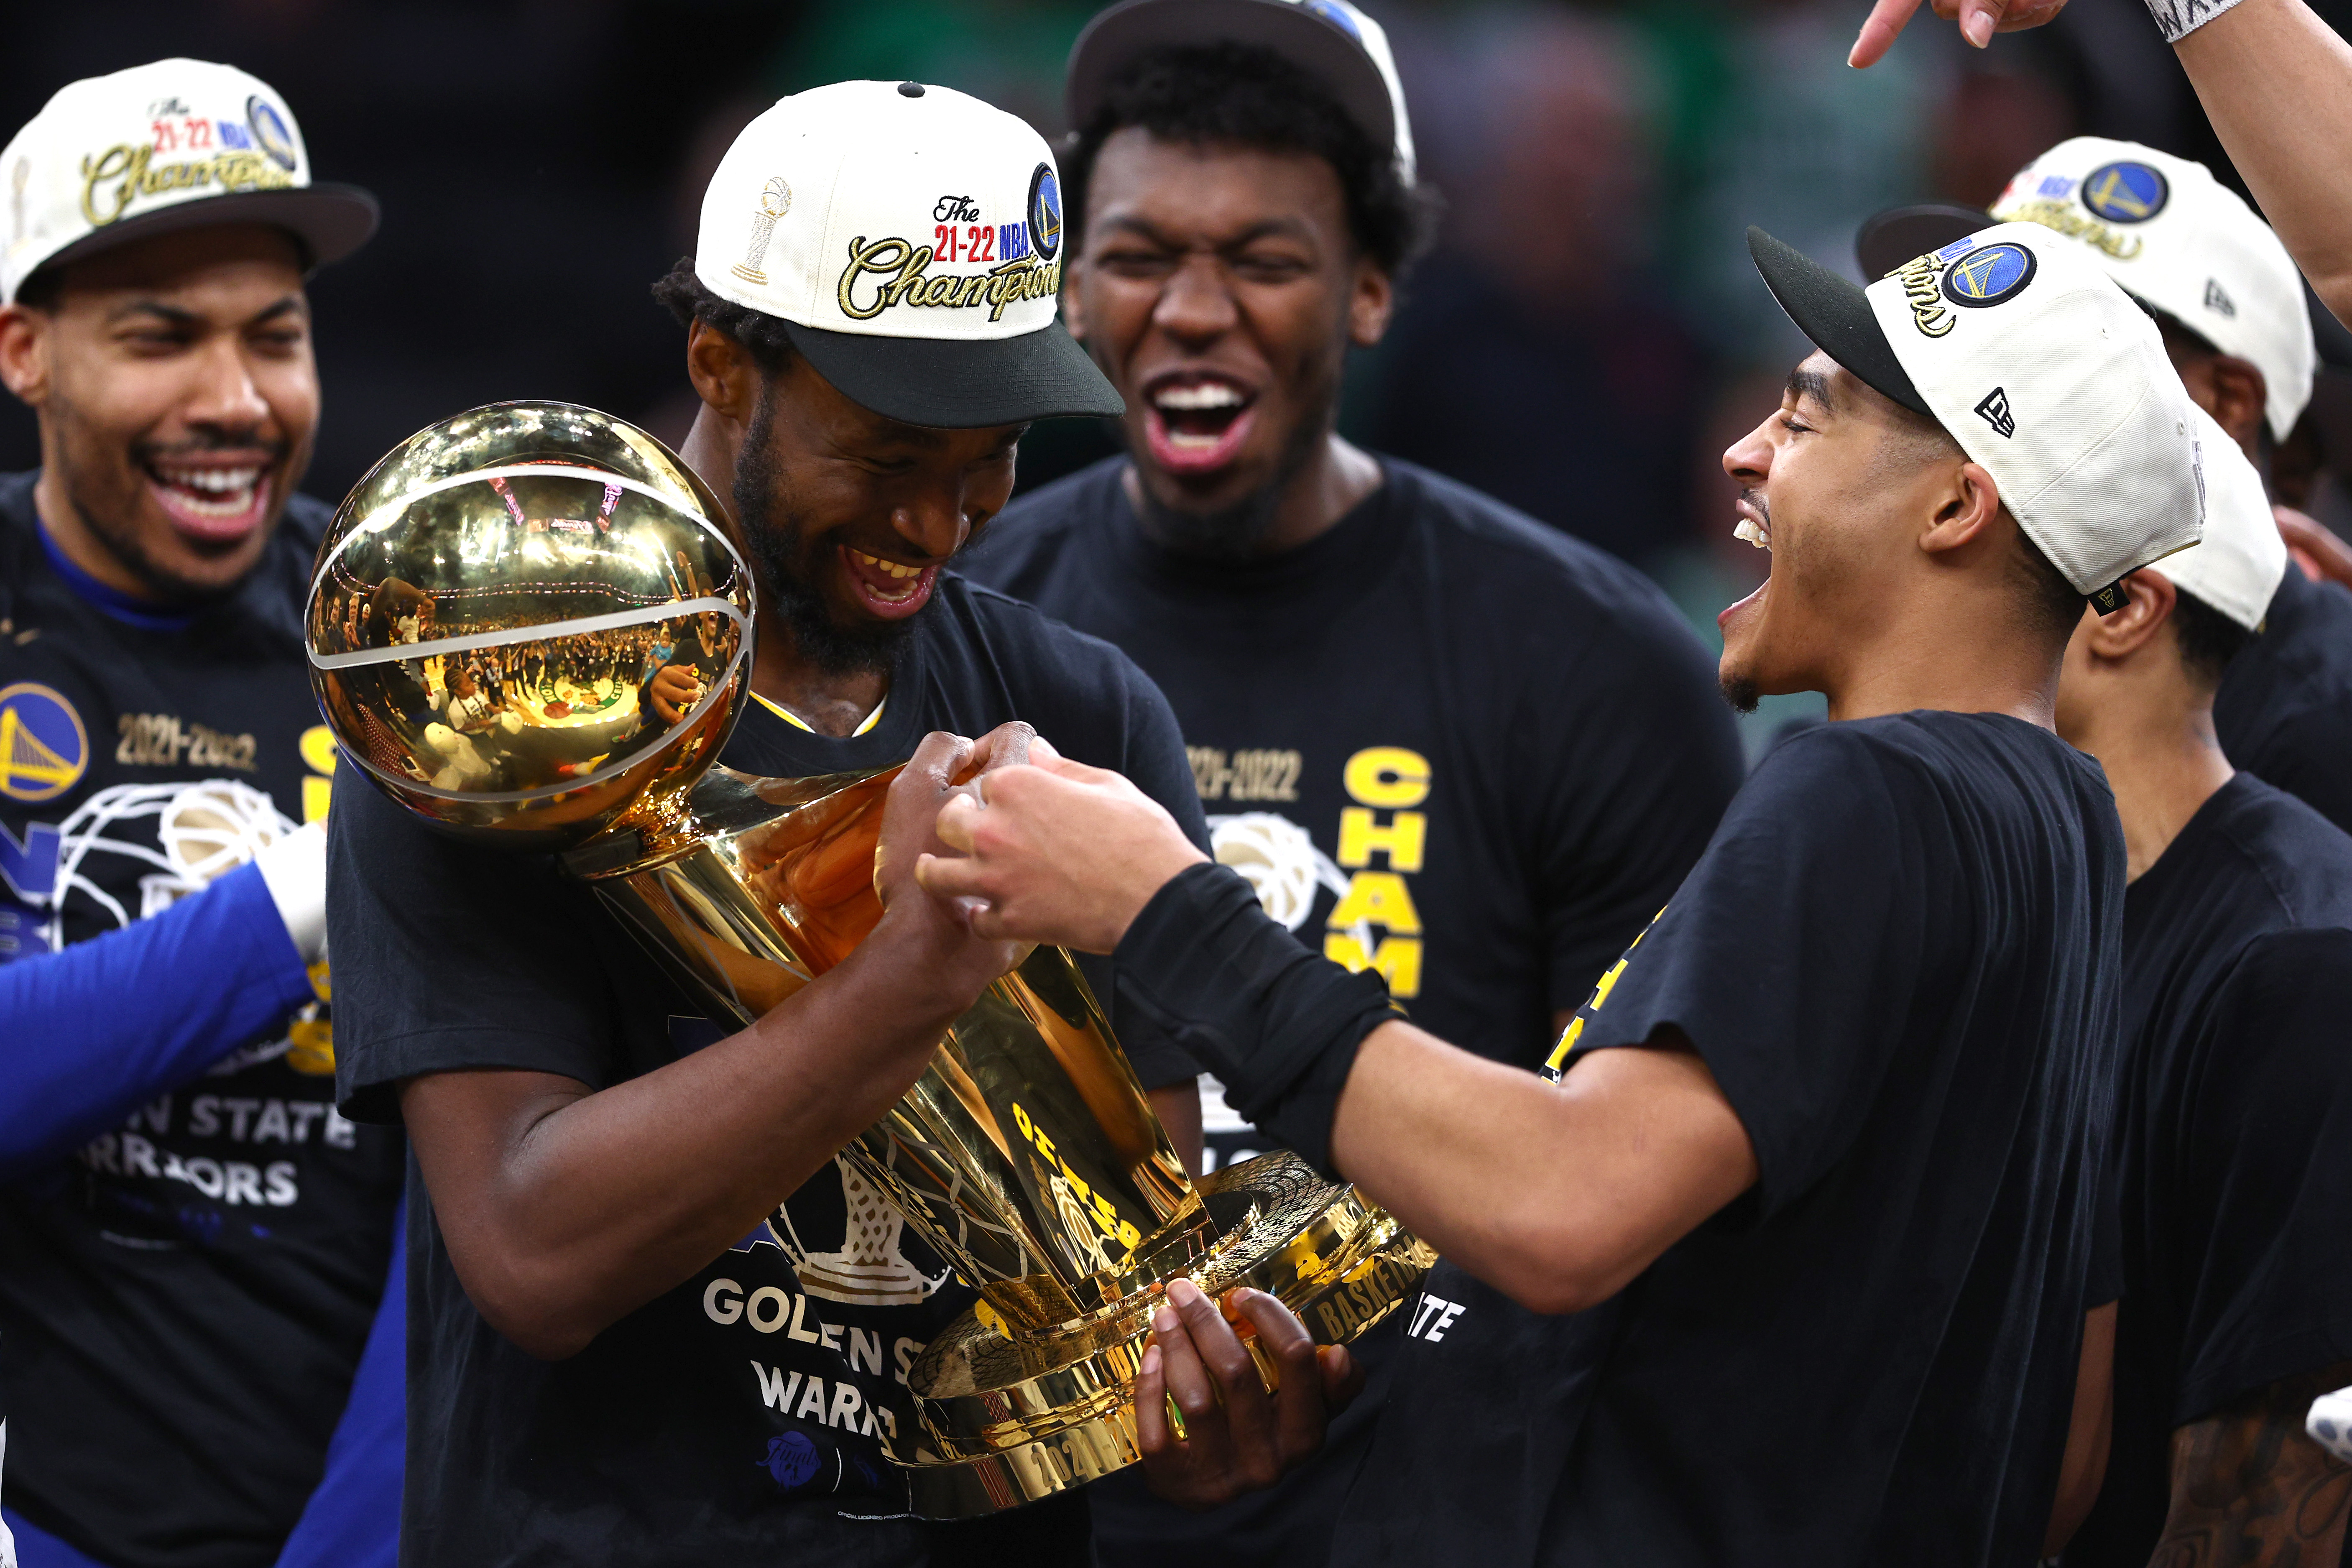 Golden State Warriors defeat Boston Celtics to win NBA Championship - OPB